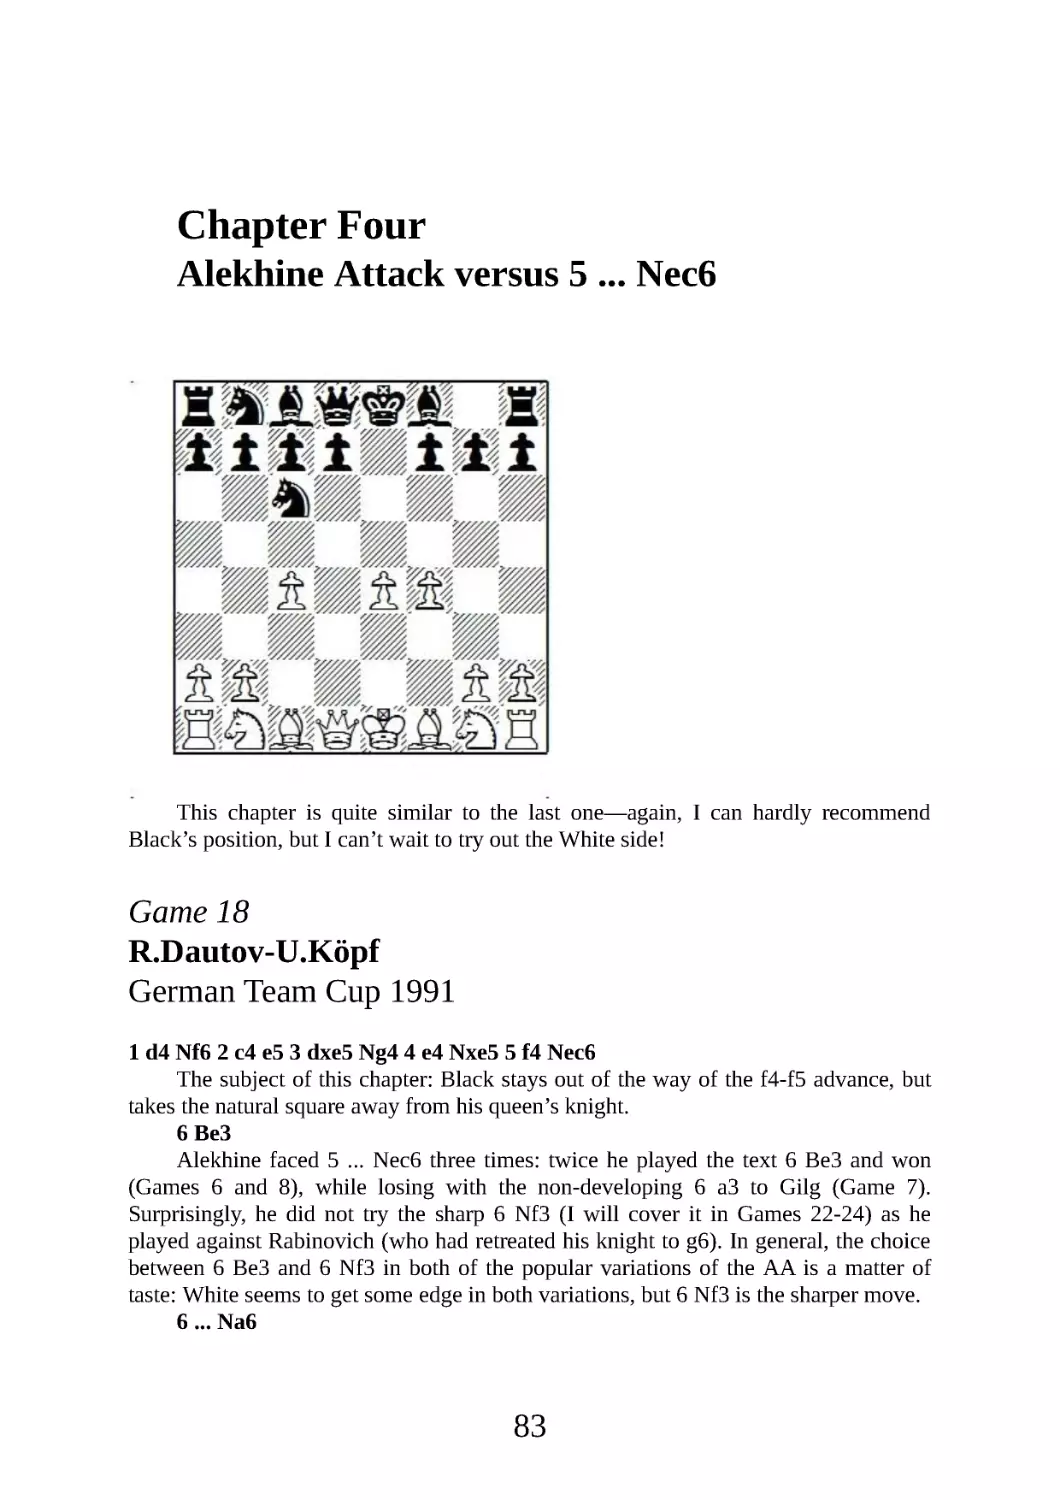 4 Alekhine Attack vs. 5 ... Nec6
Dautov.R-Köpf.U, German Team Cup 1991